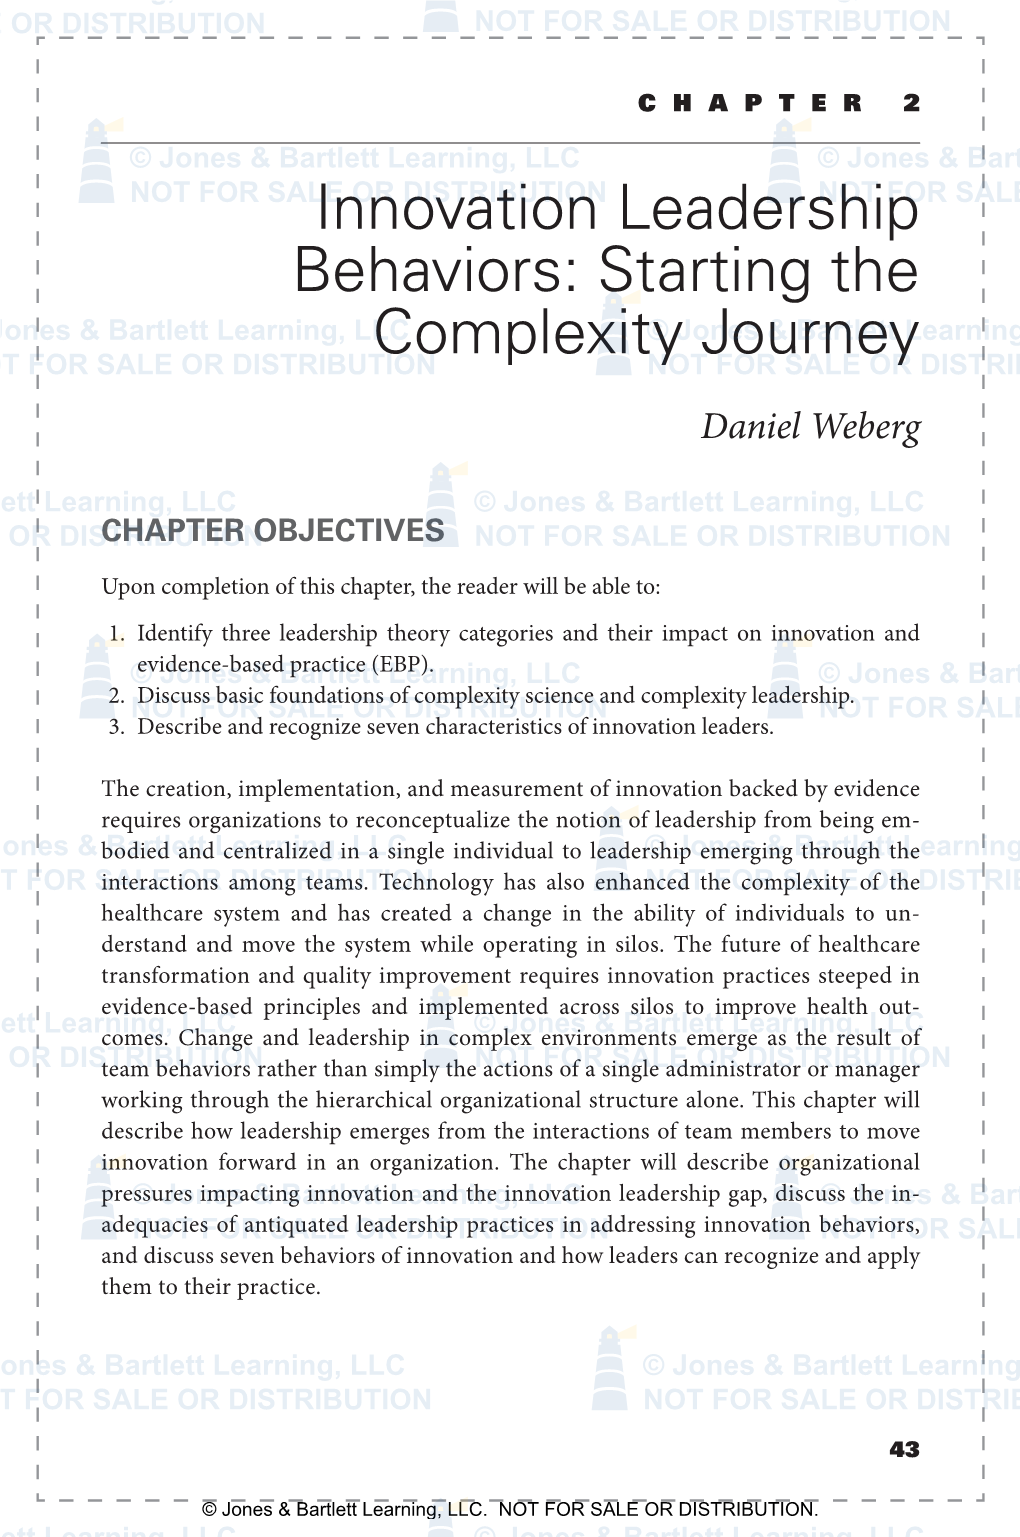 Innovation Leadership Behaviors: Starting the Complexity Journey